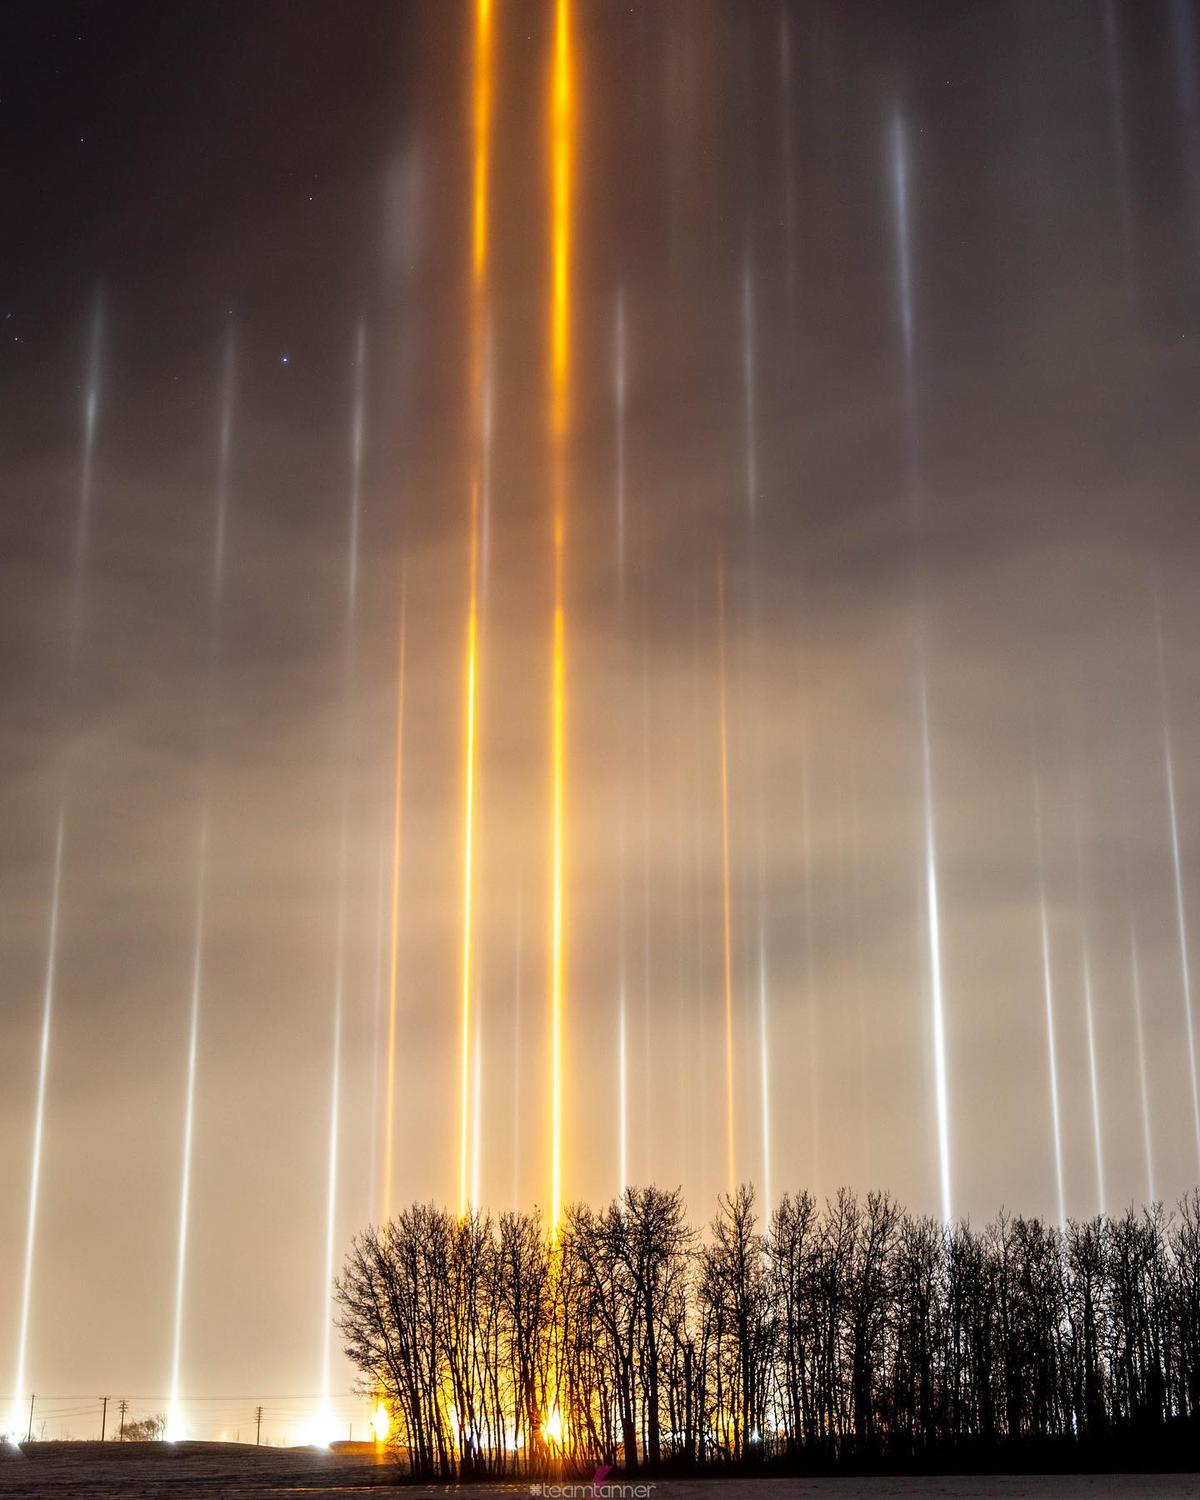 Light pillars over central Alberta, Canada. (Courtesy of <a href="https://www.instagram.com/dartanner/">Dar Tanner</a>)